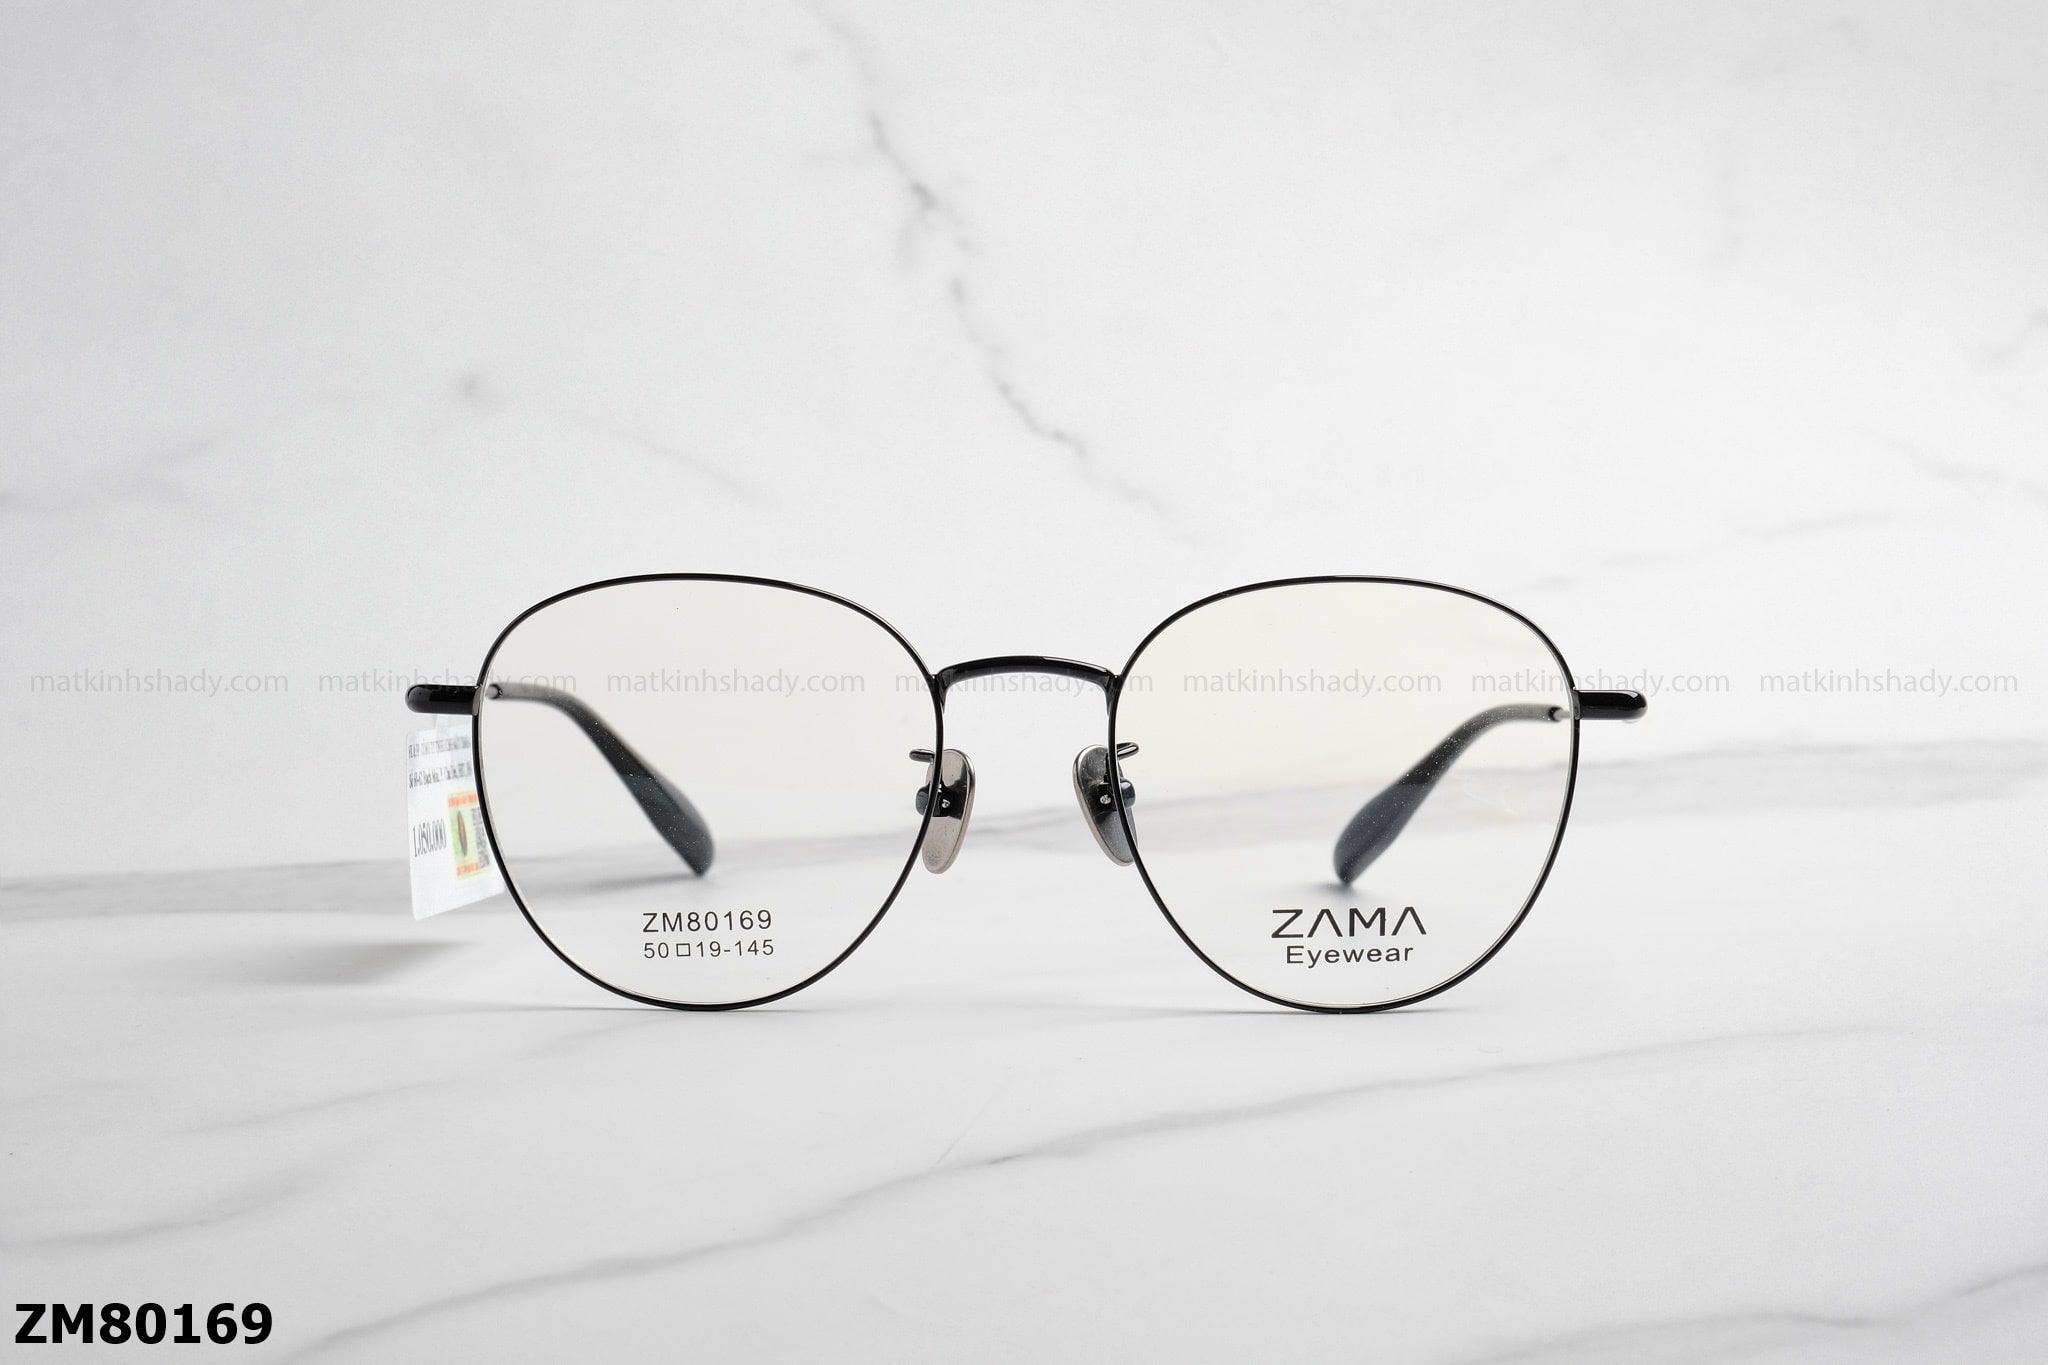  ZAMA Eyewear - Glasses - ZM80169 